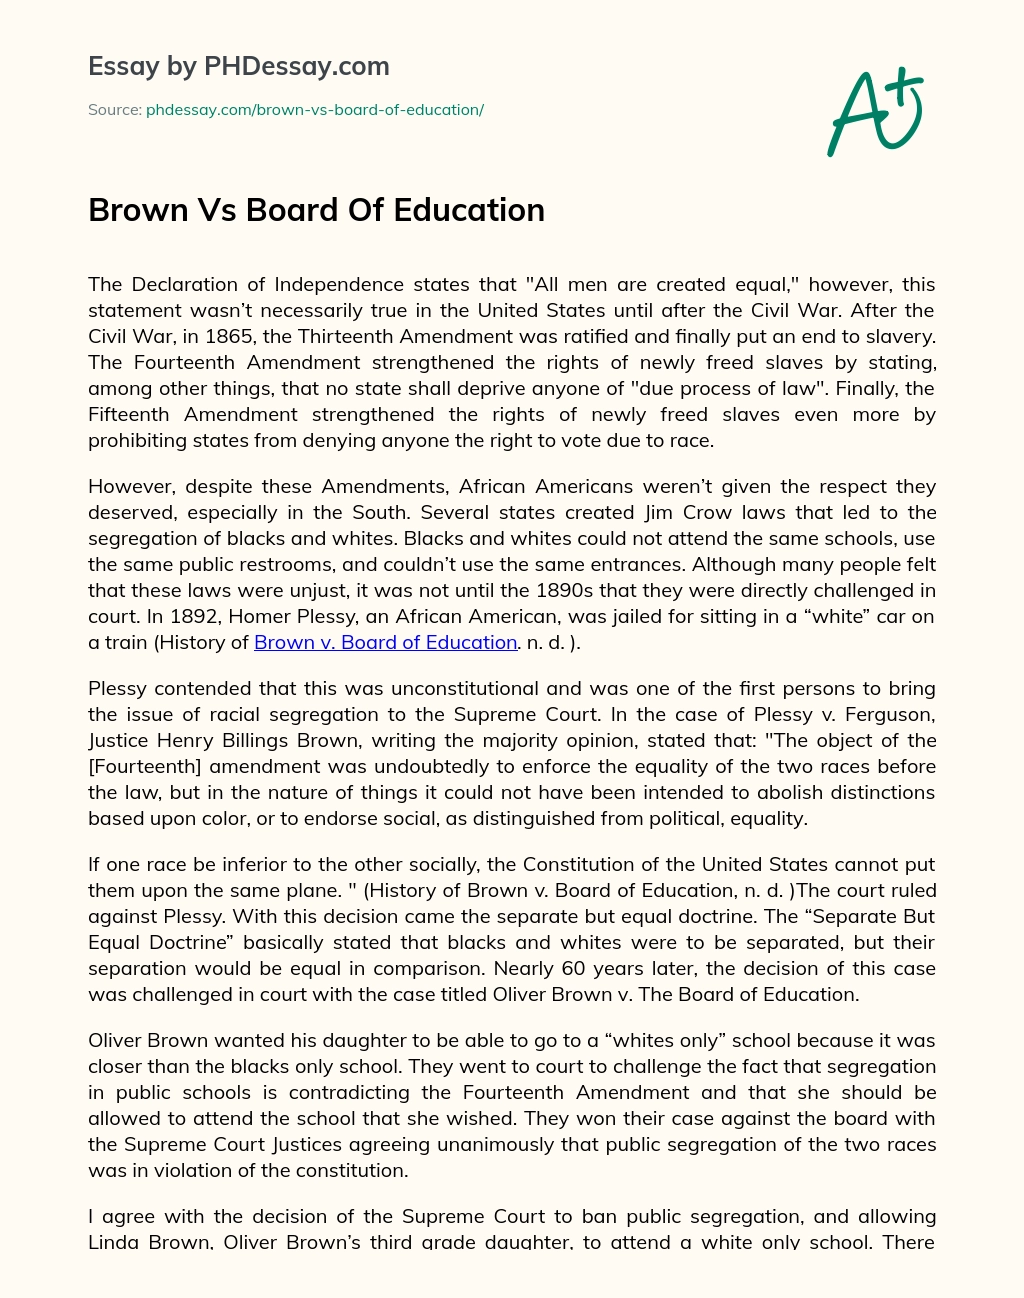 Brown Vs Board Of Education essay